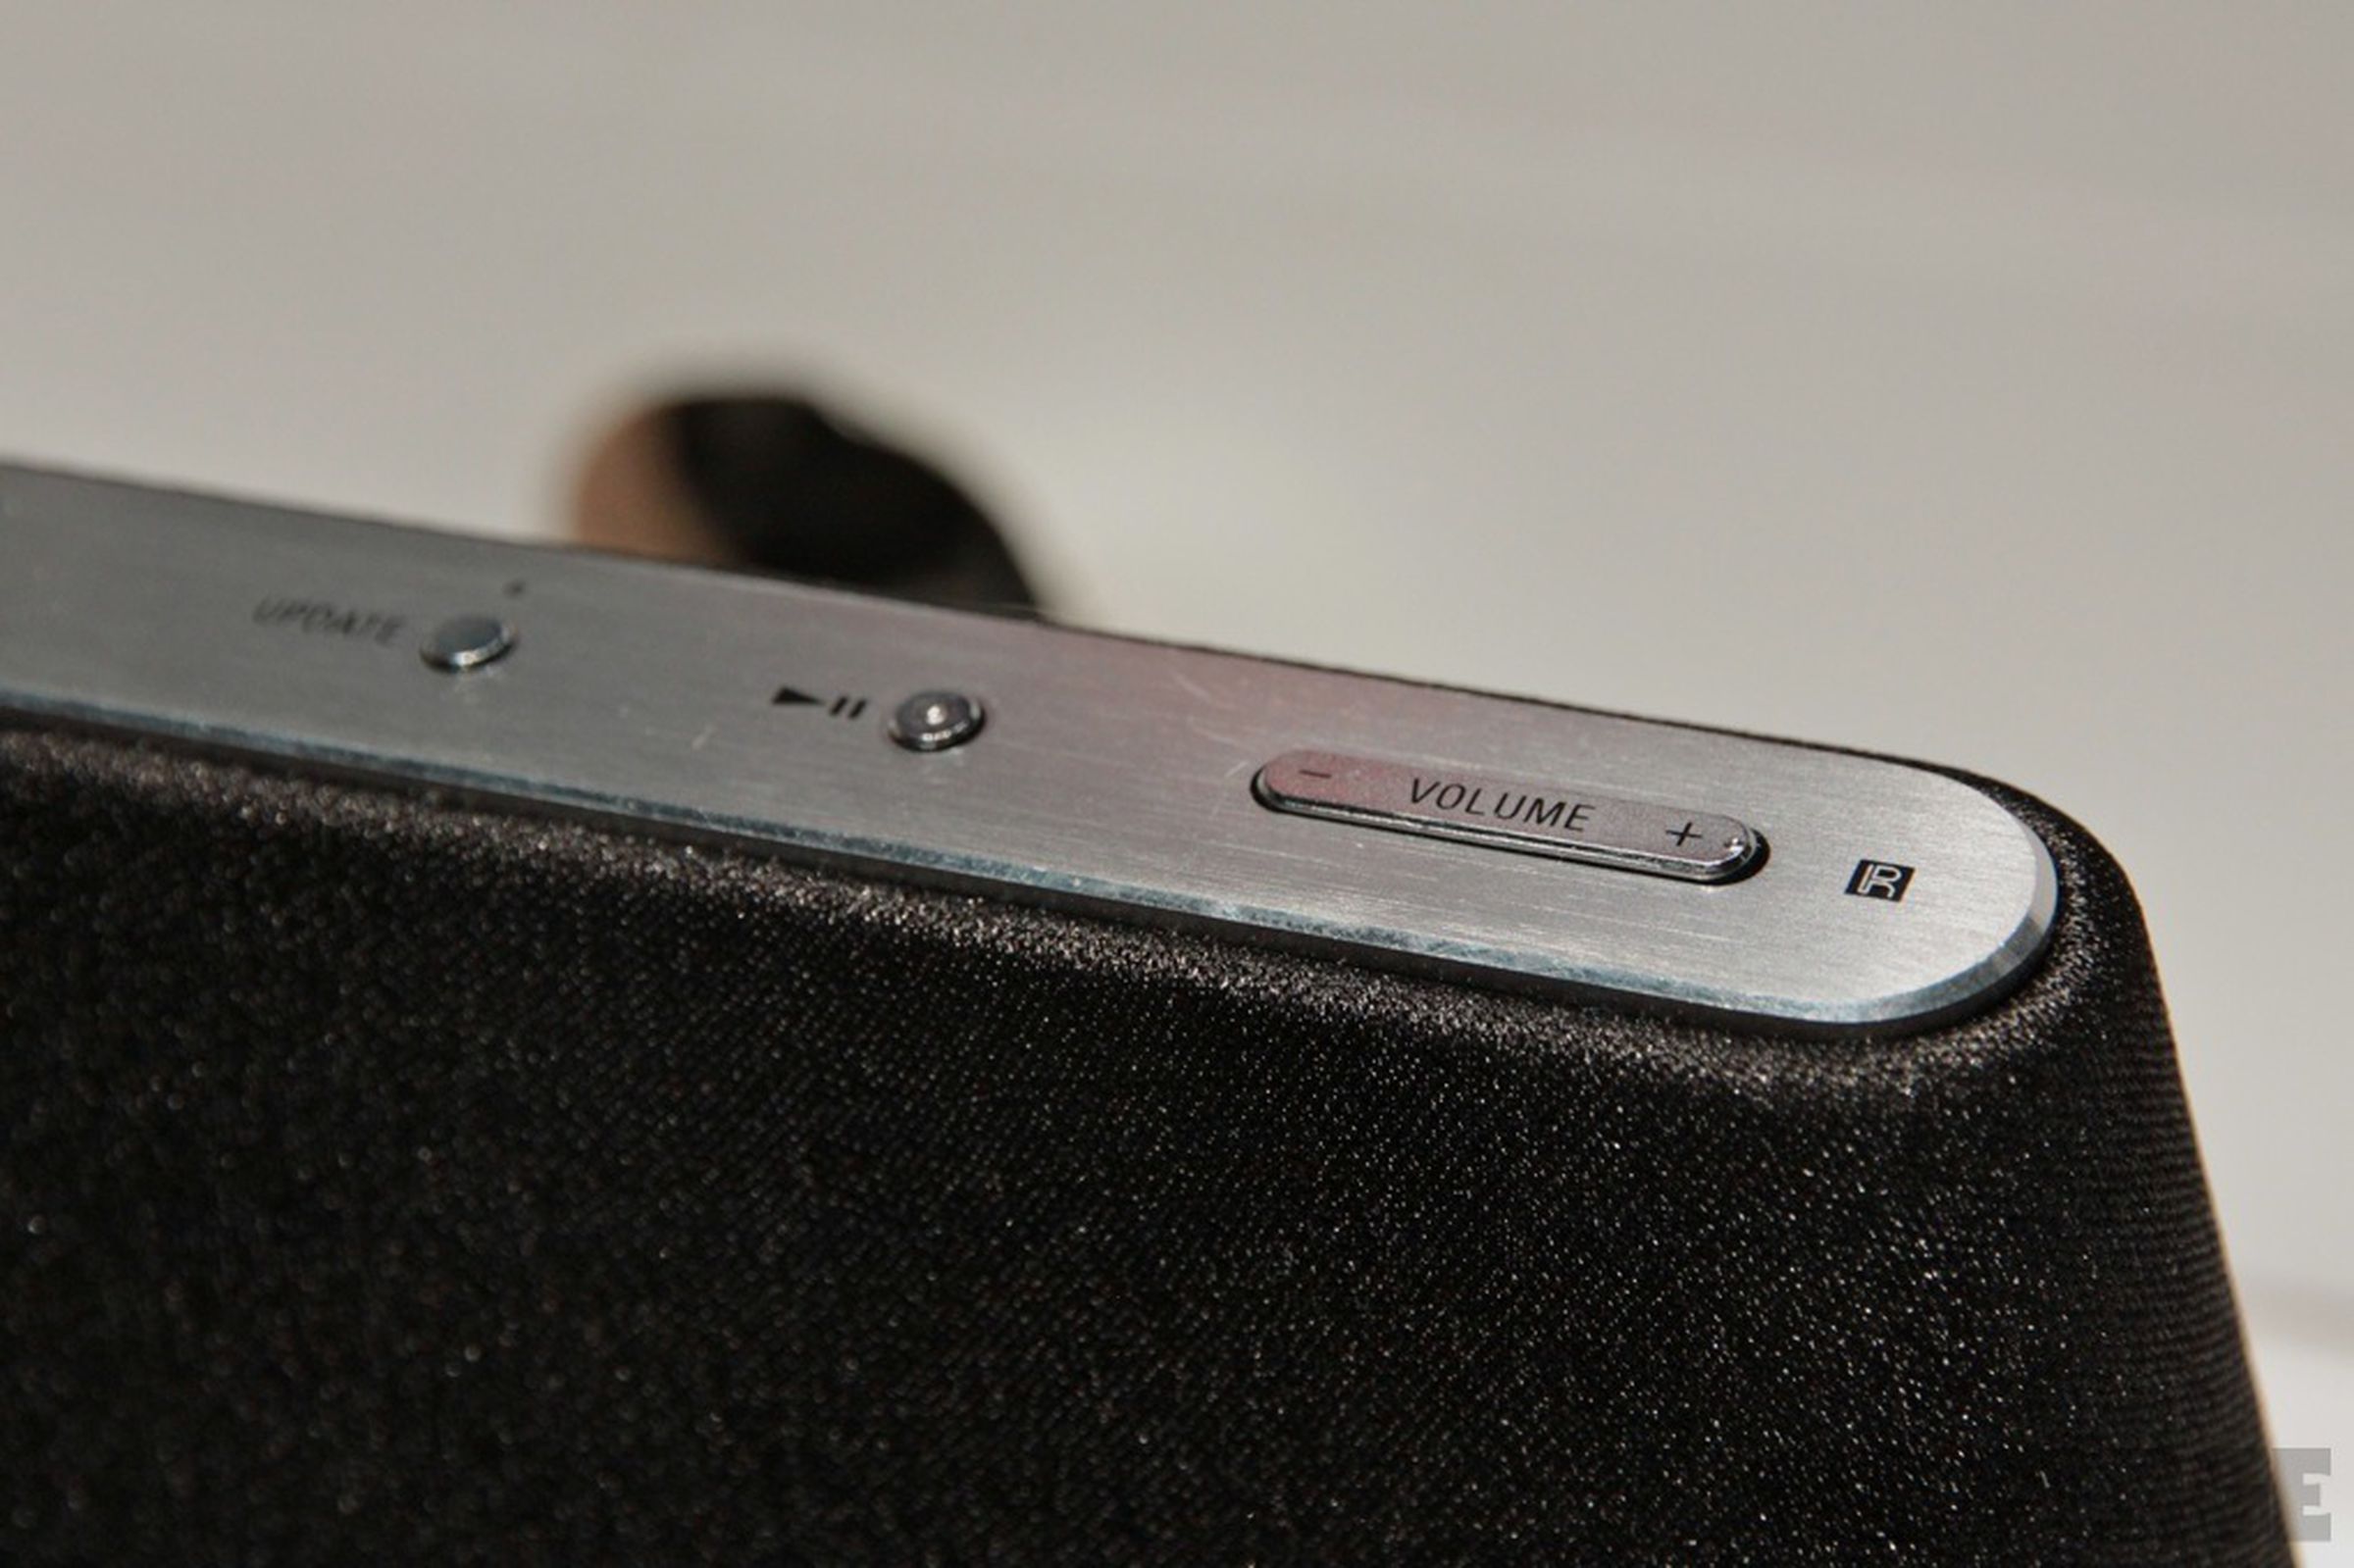 Sony iPad-compatible speaker docks hands-on photos